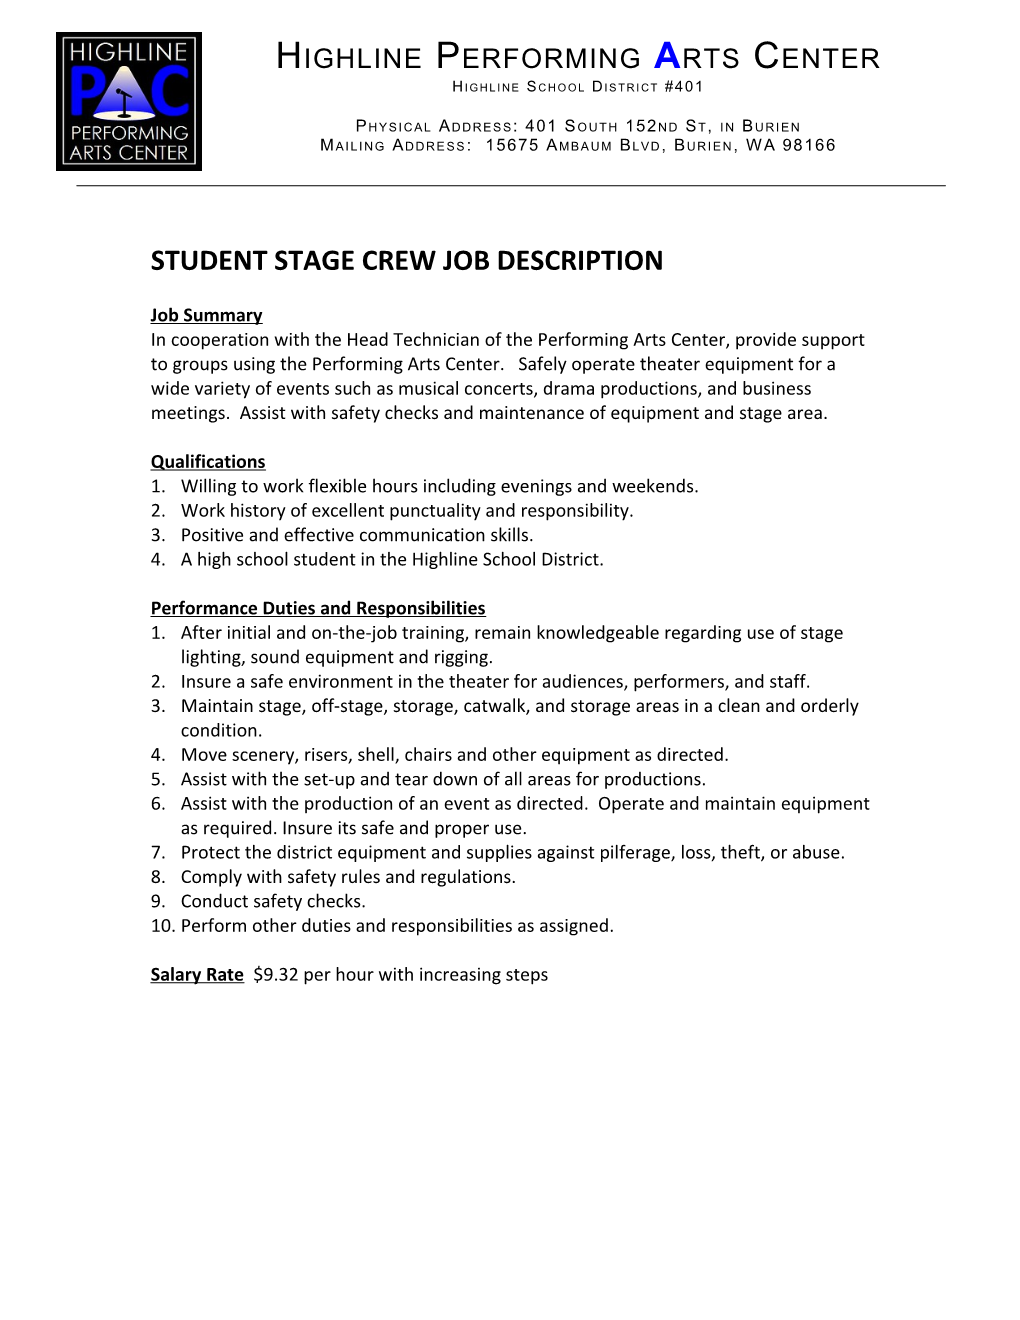 Student Stage Crew Job Description